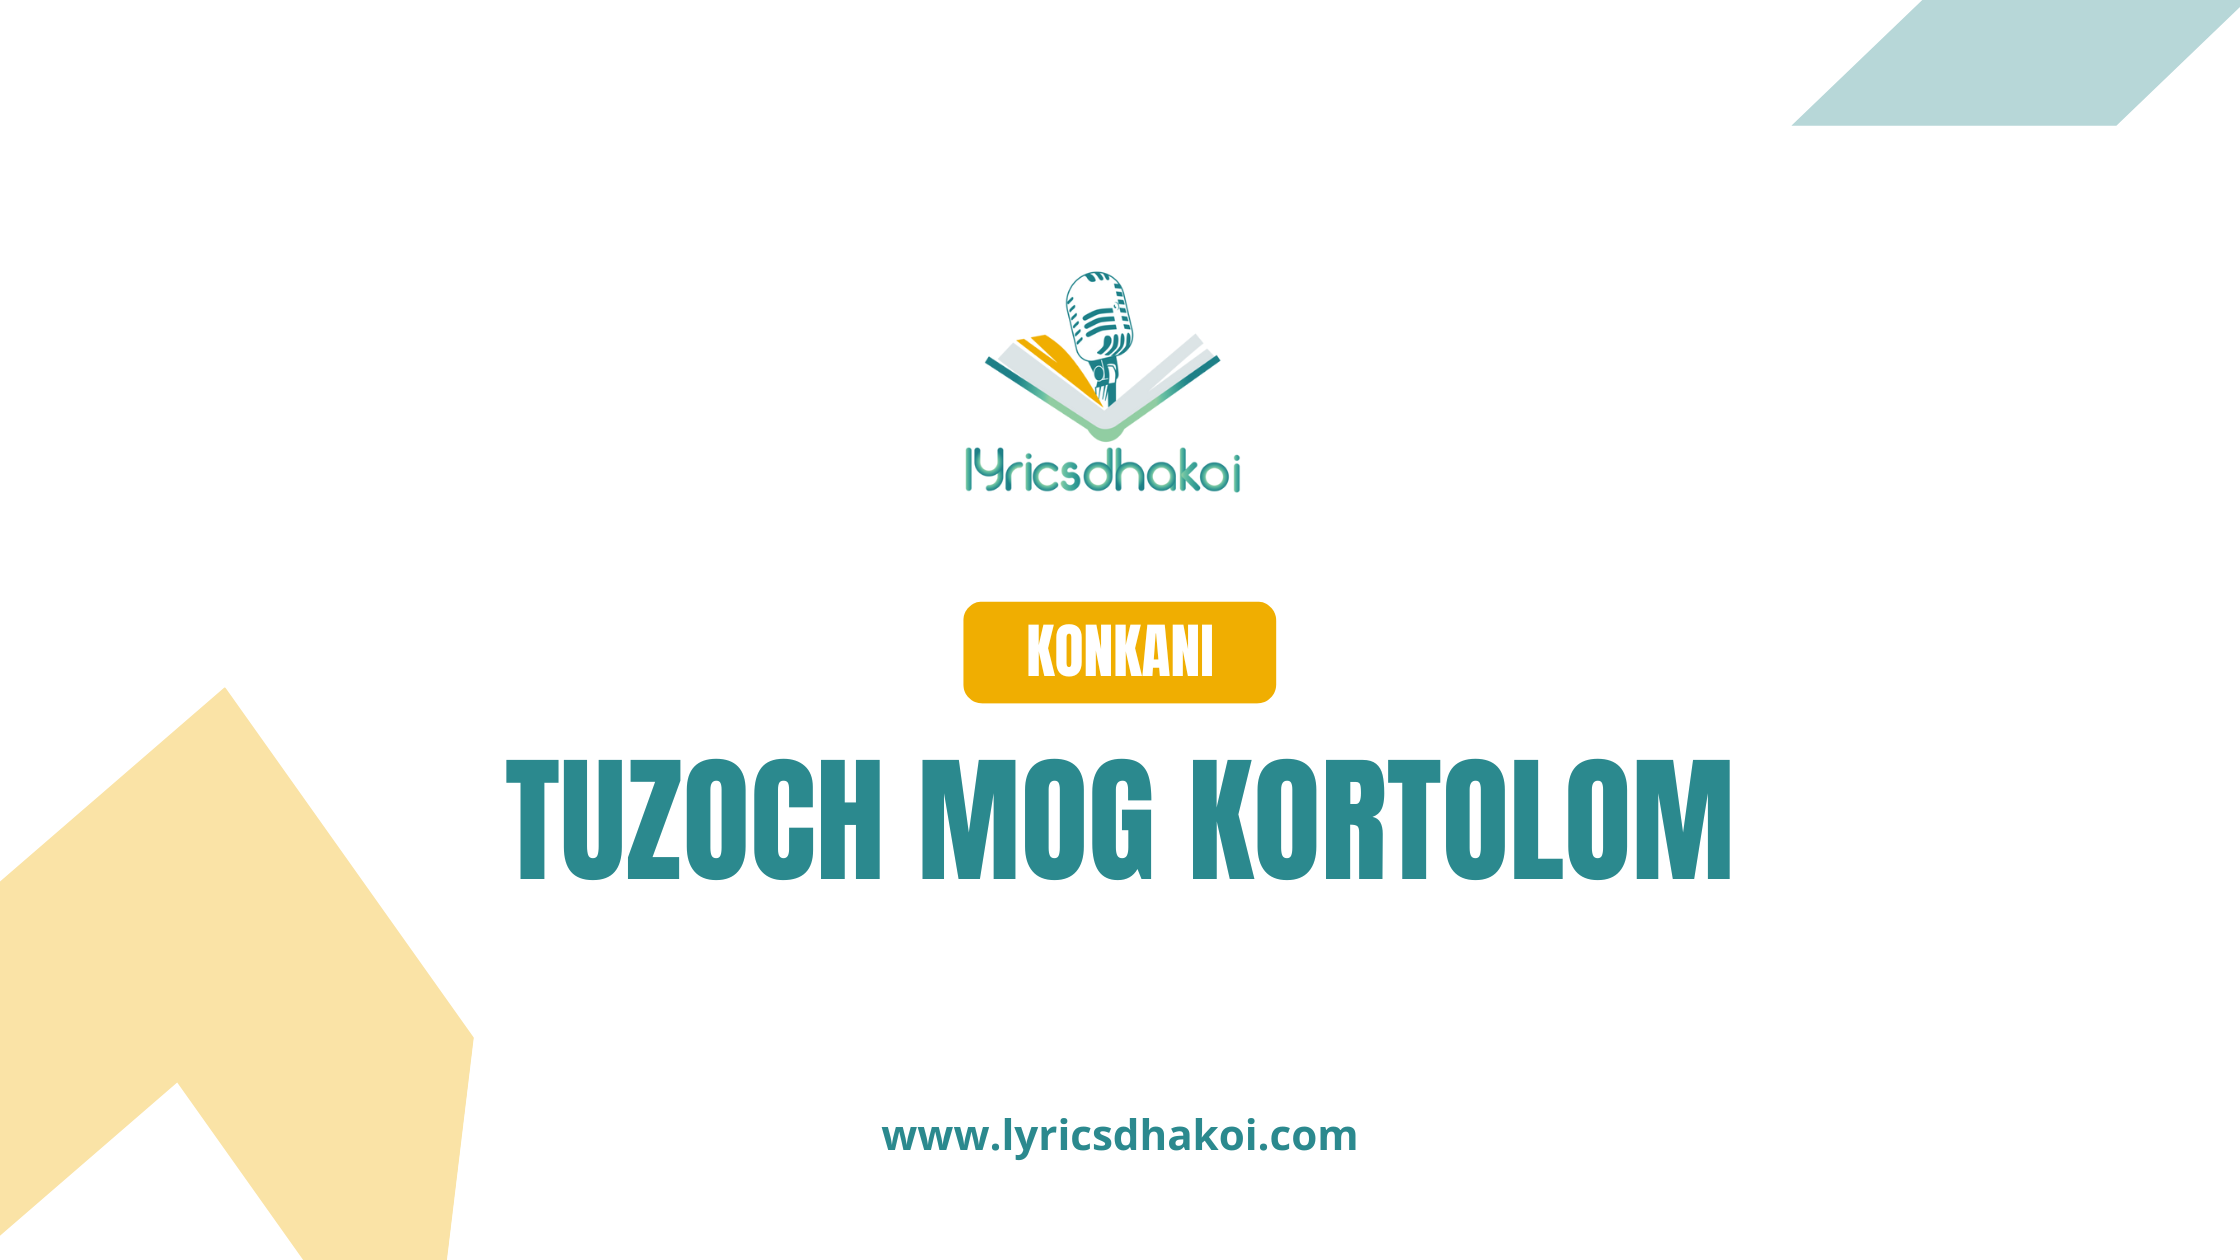 Tuzoch Mog Kortolom Konkani Lyrics for Karaoke Online - LyricsDhakoi.com